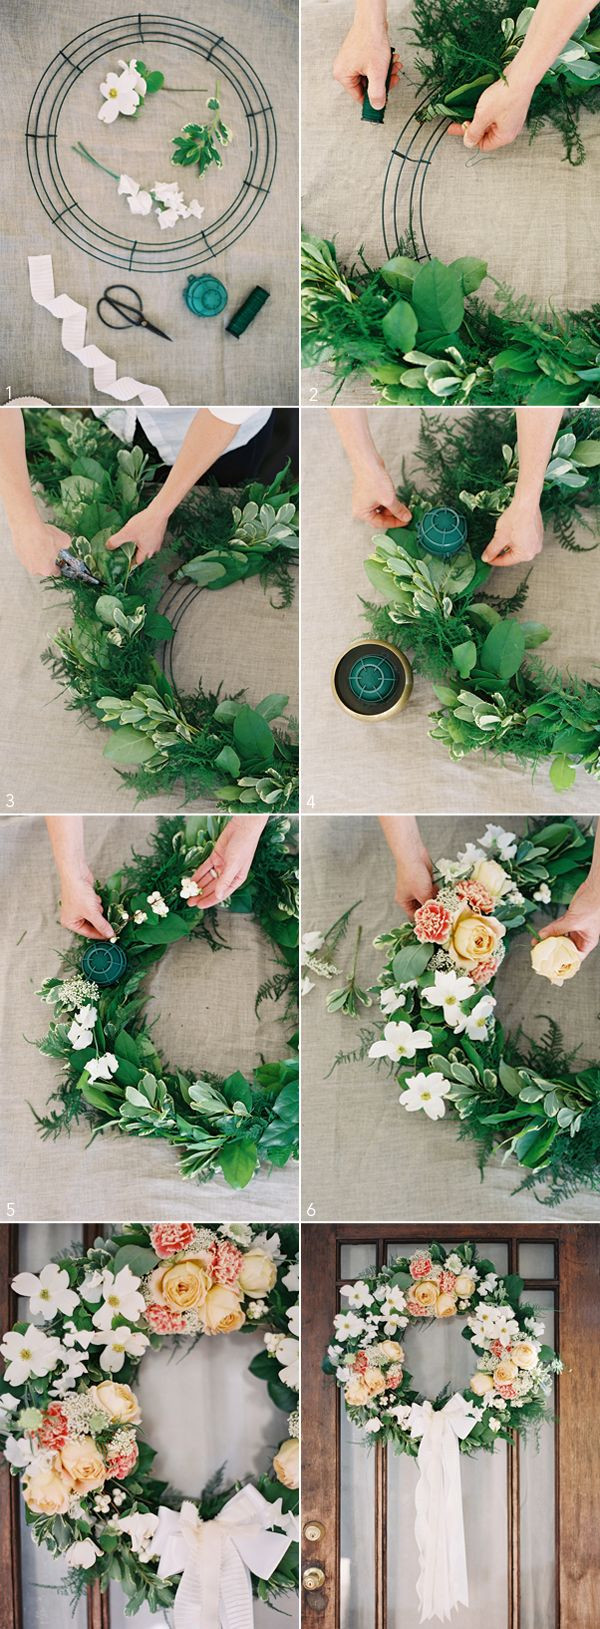 How To DIY Wedding
 20 Creative DIY Wedding Ideas For 2016 Spring